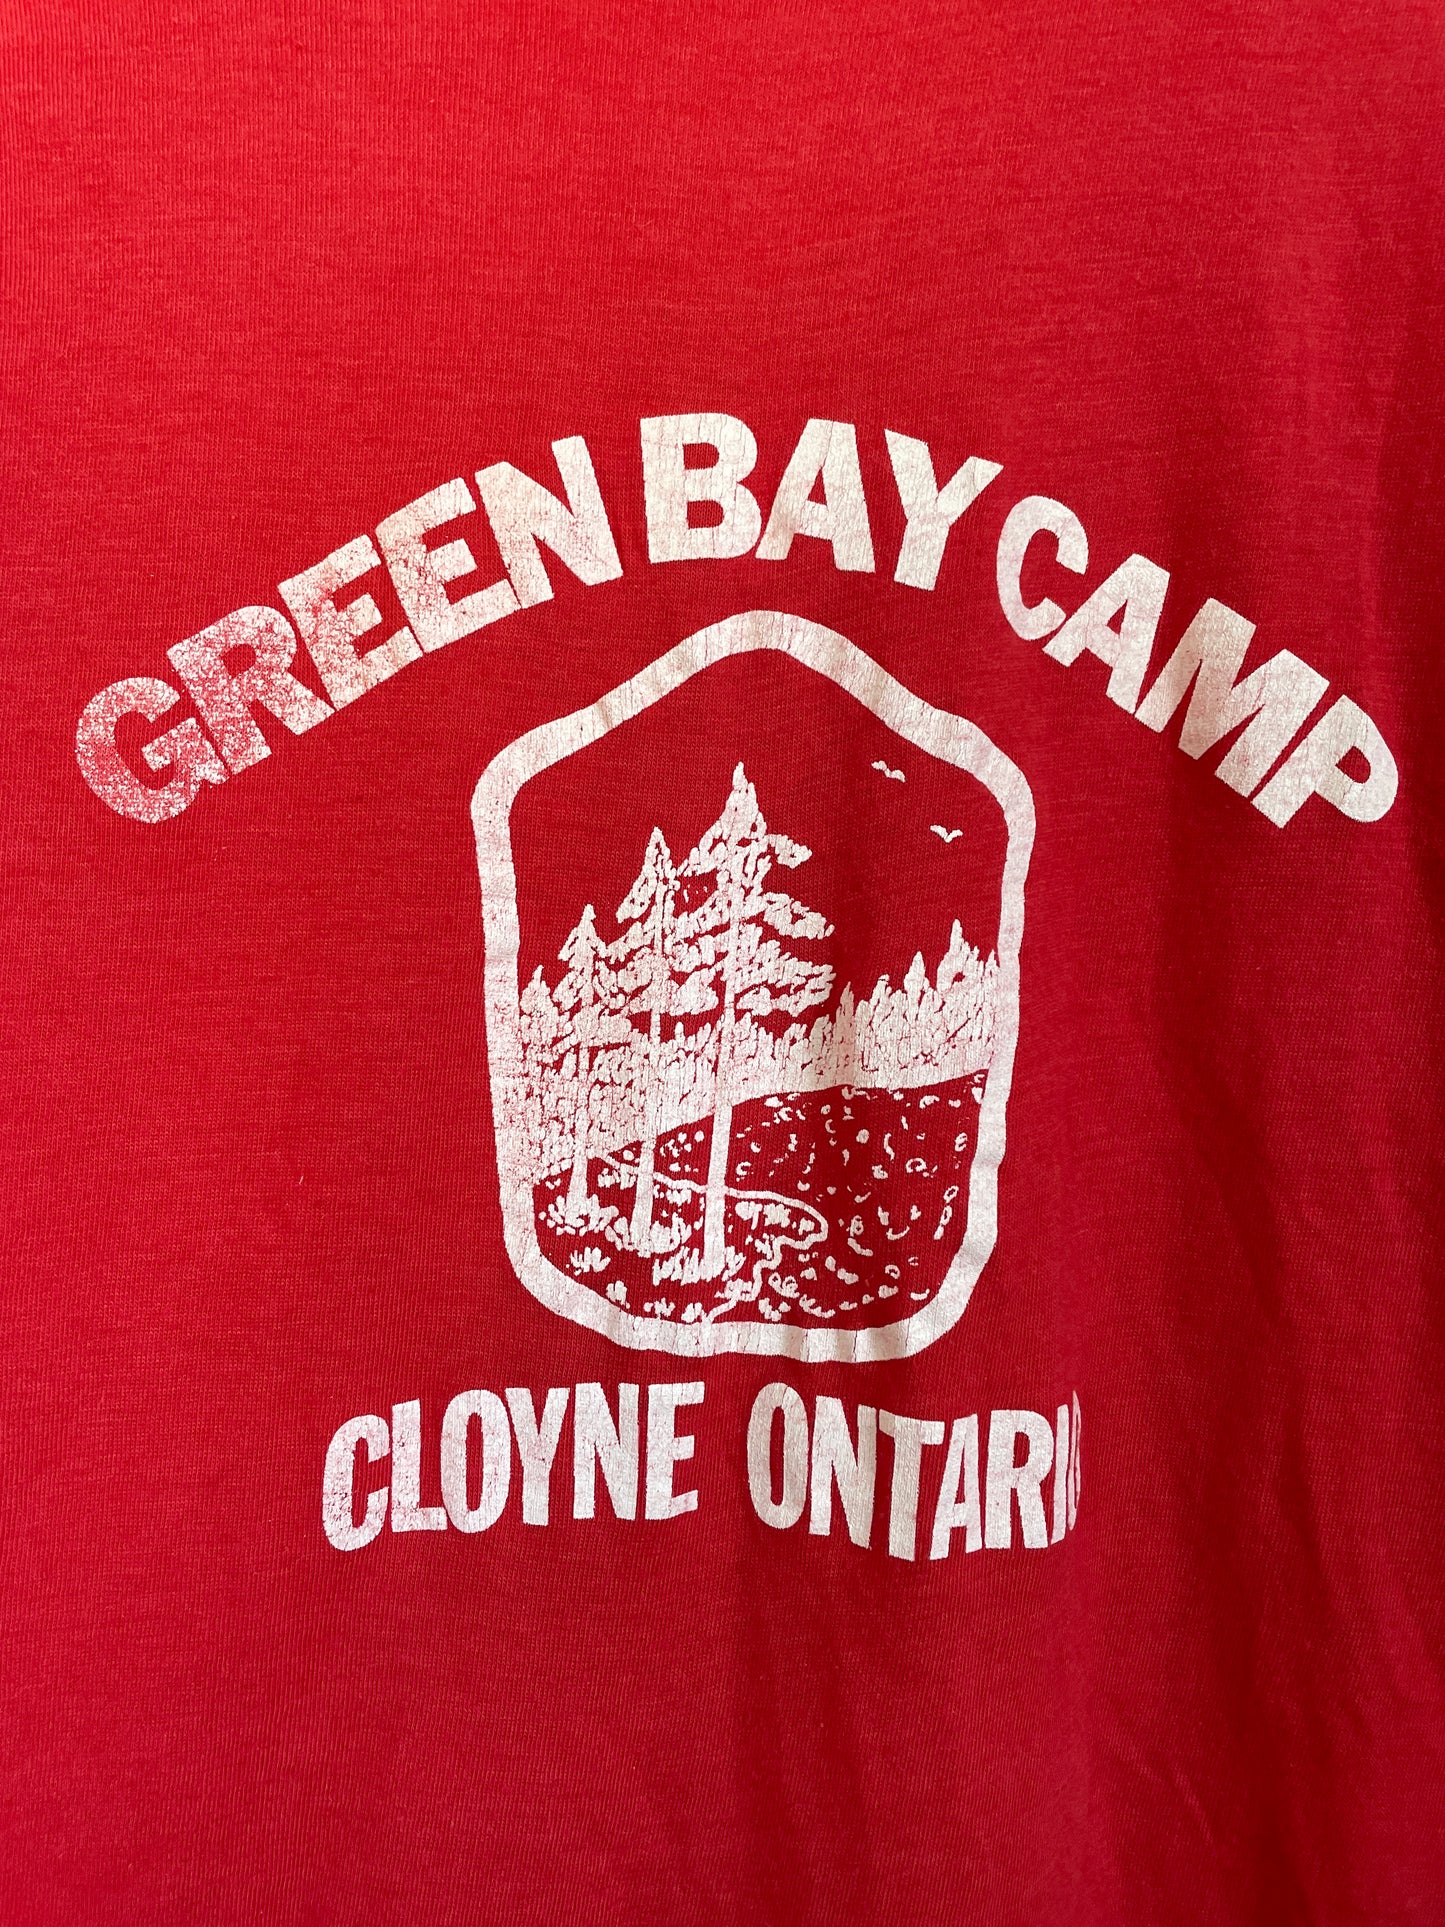 70s Green Bay Camp Cloyne Ontario Tee